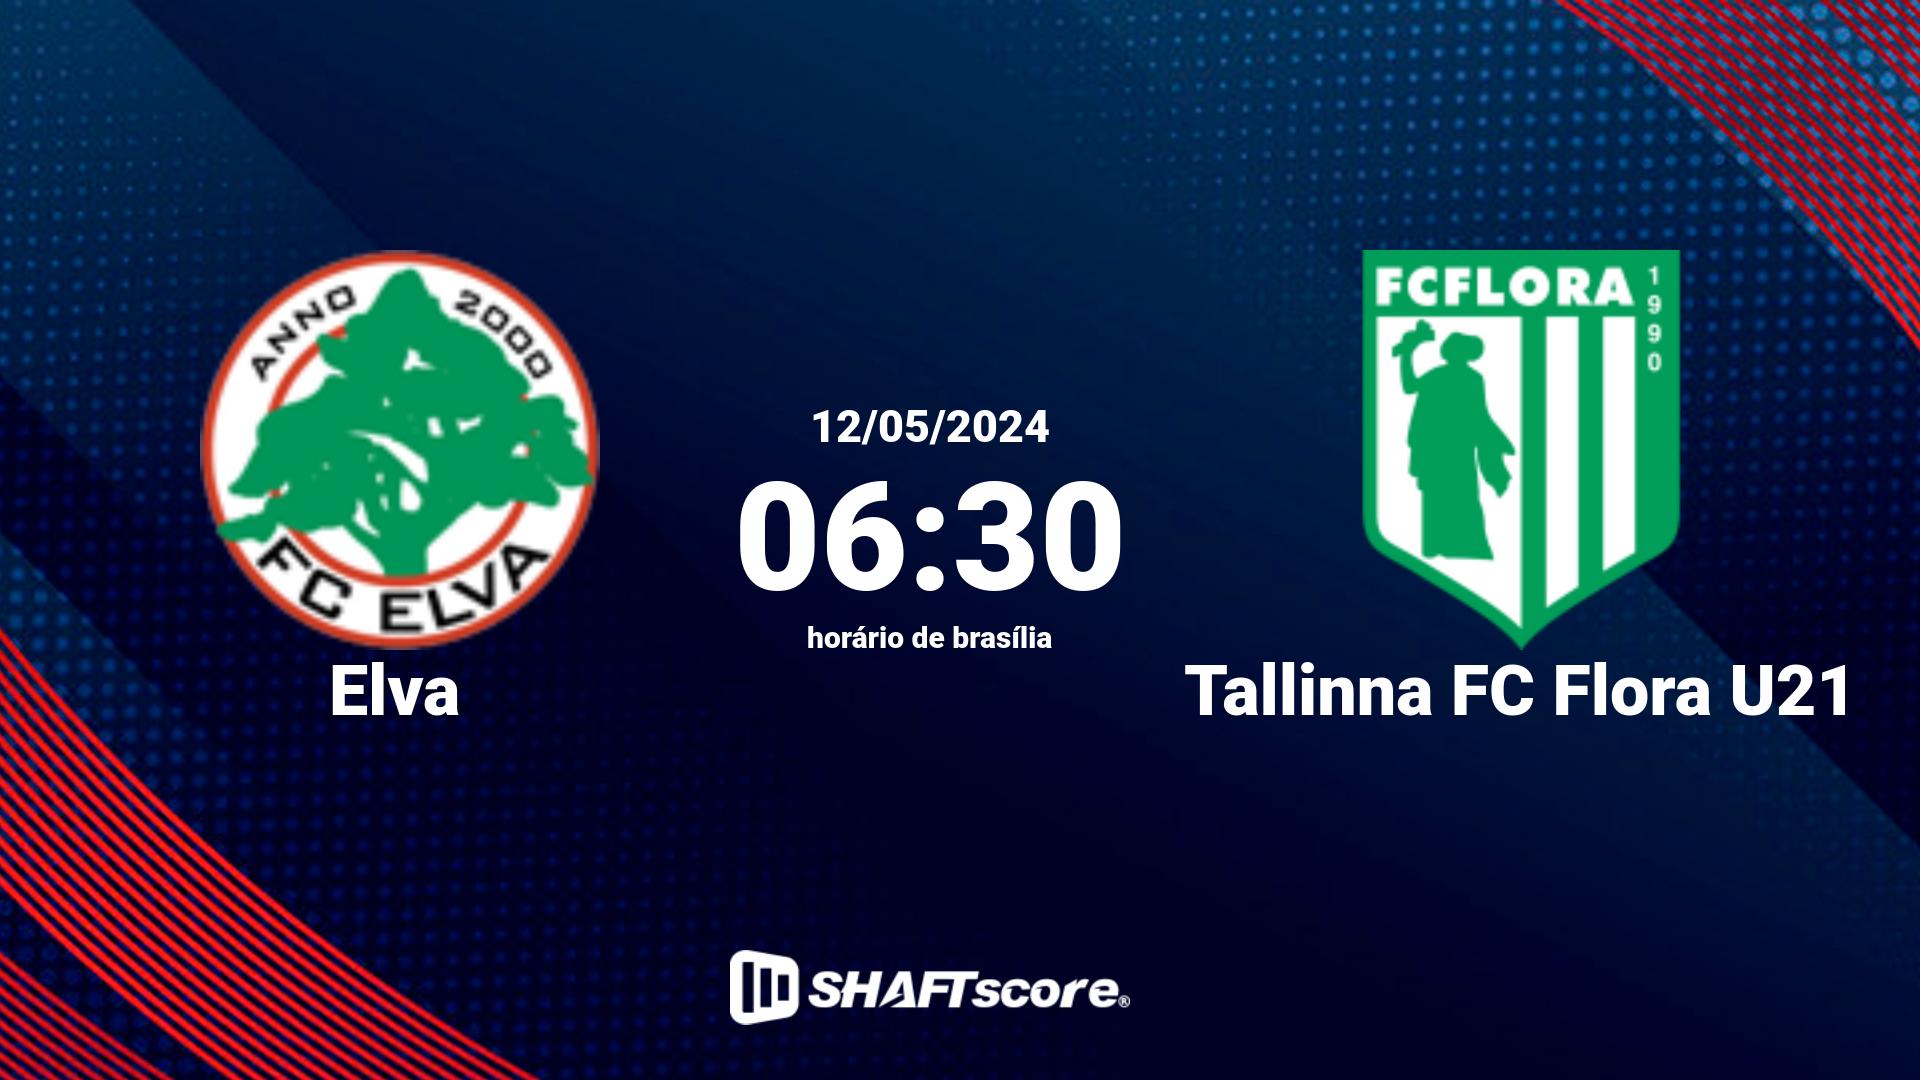 Estatísticas do jogo Elva vs Tallinna FC Flora U21 12.05 06:30